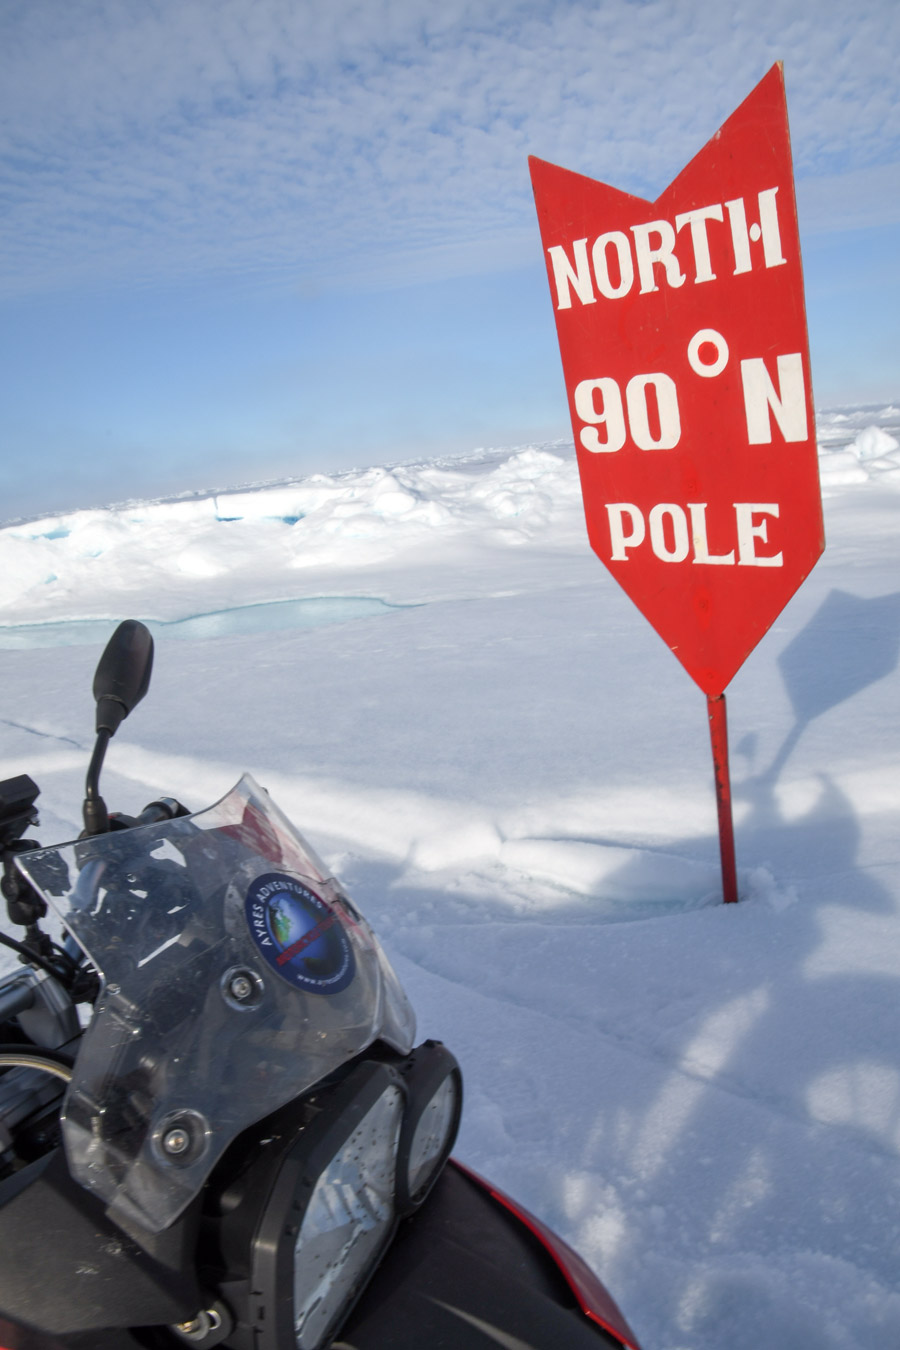 North Pole Adventure 2017, Motorcycle Tour, North Pole